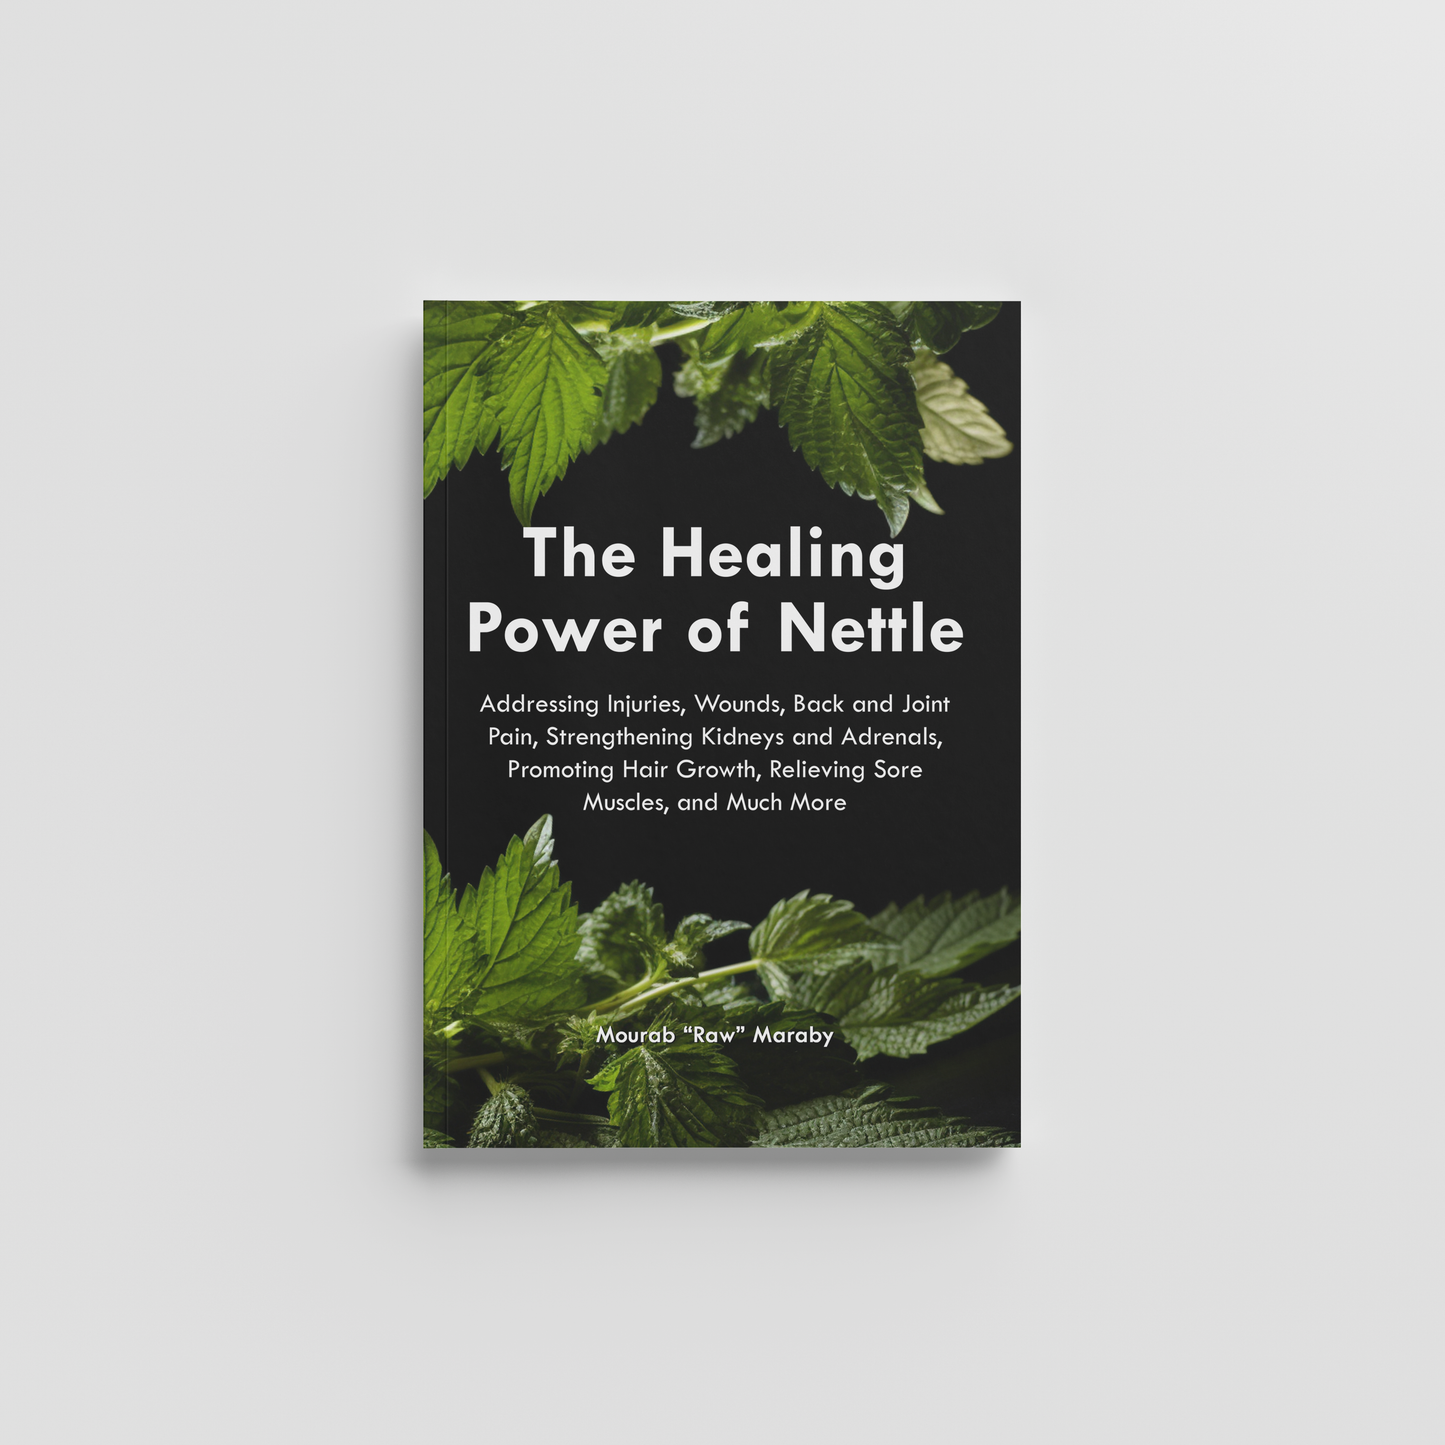 The Healing Power of Nettle